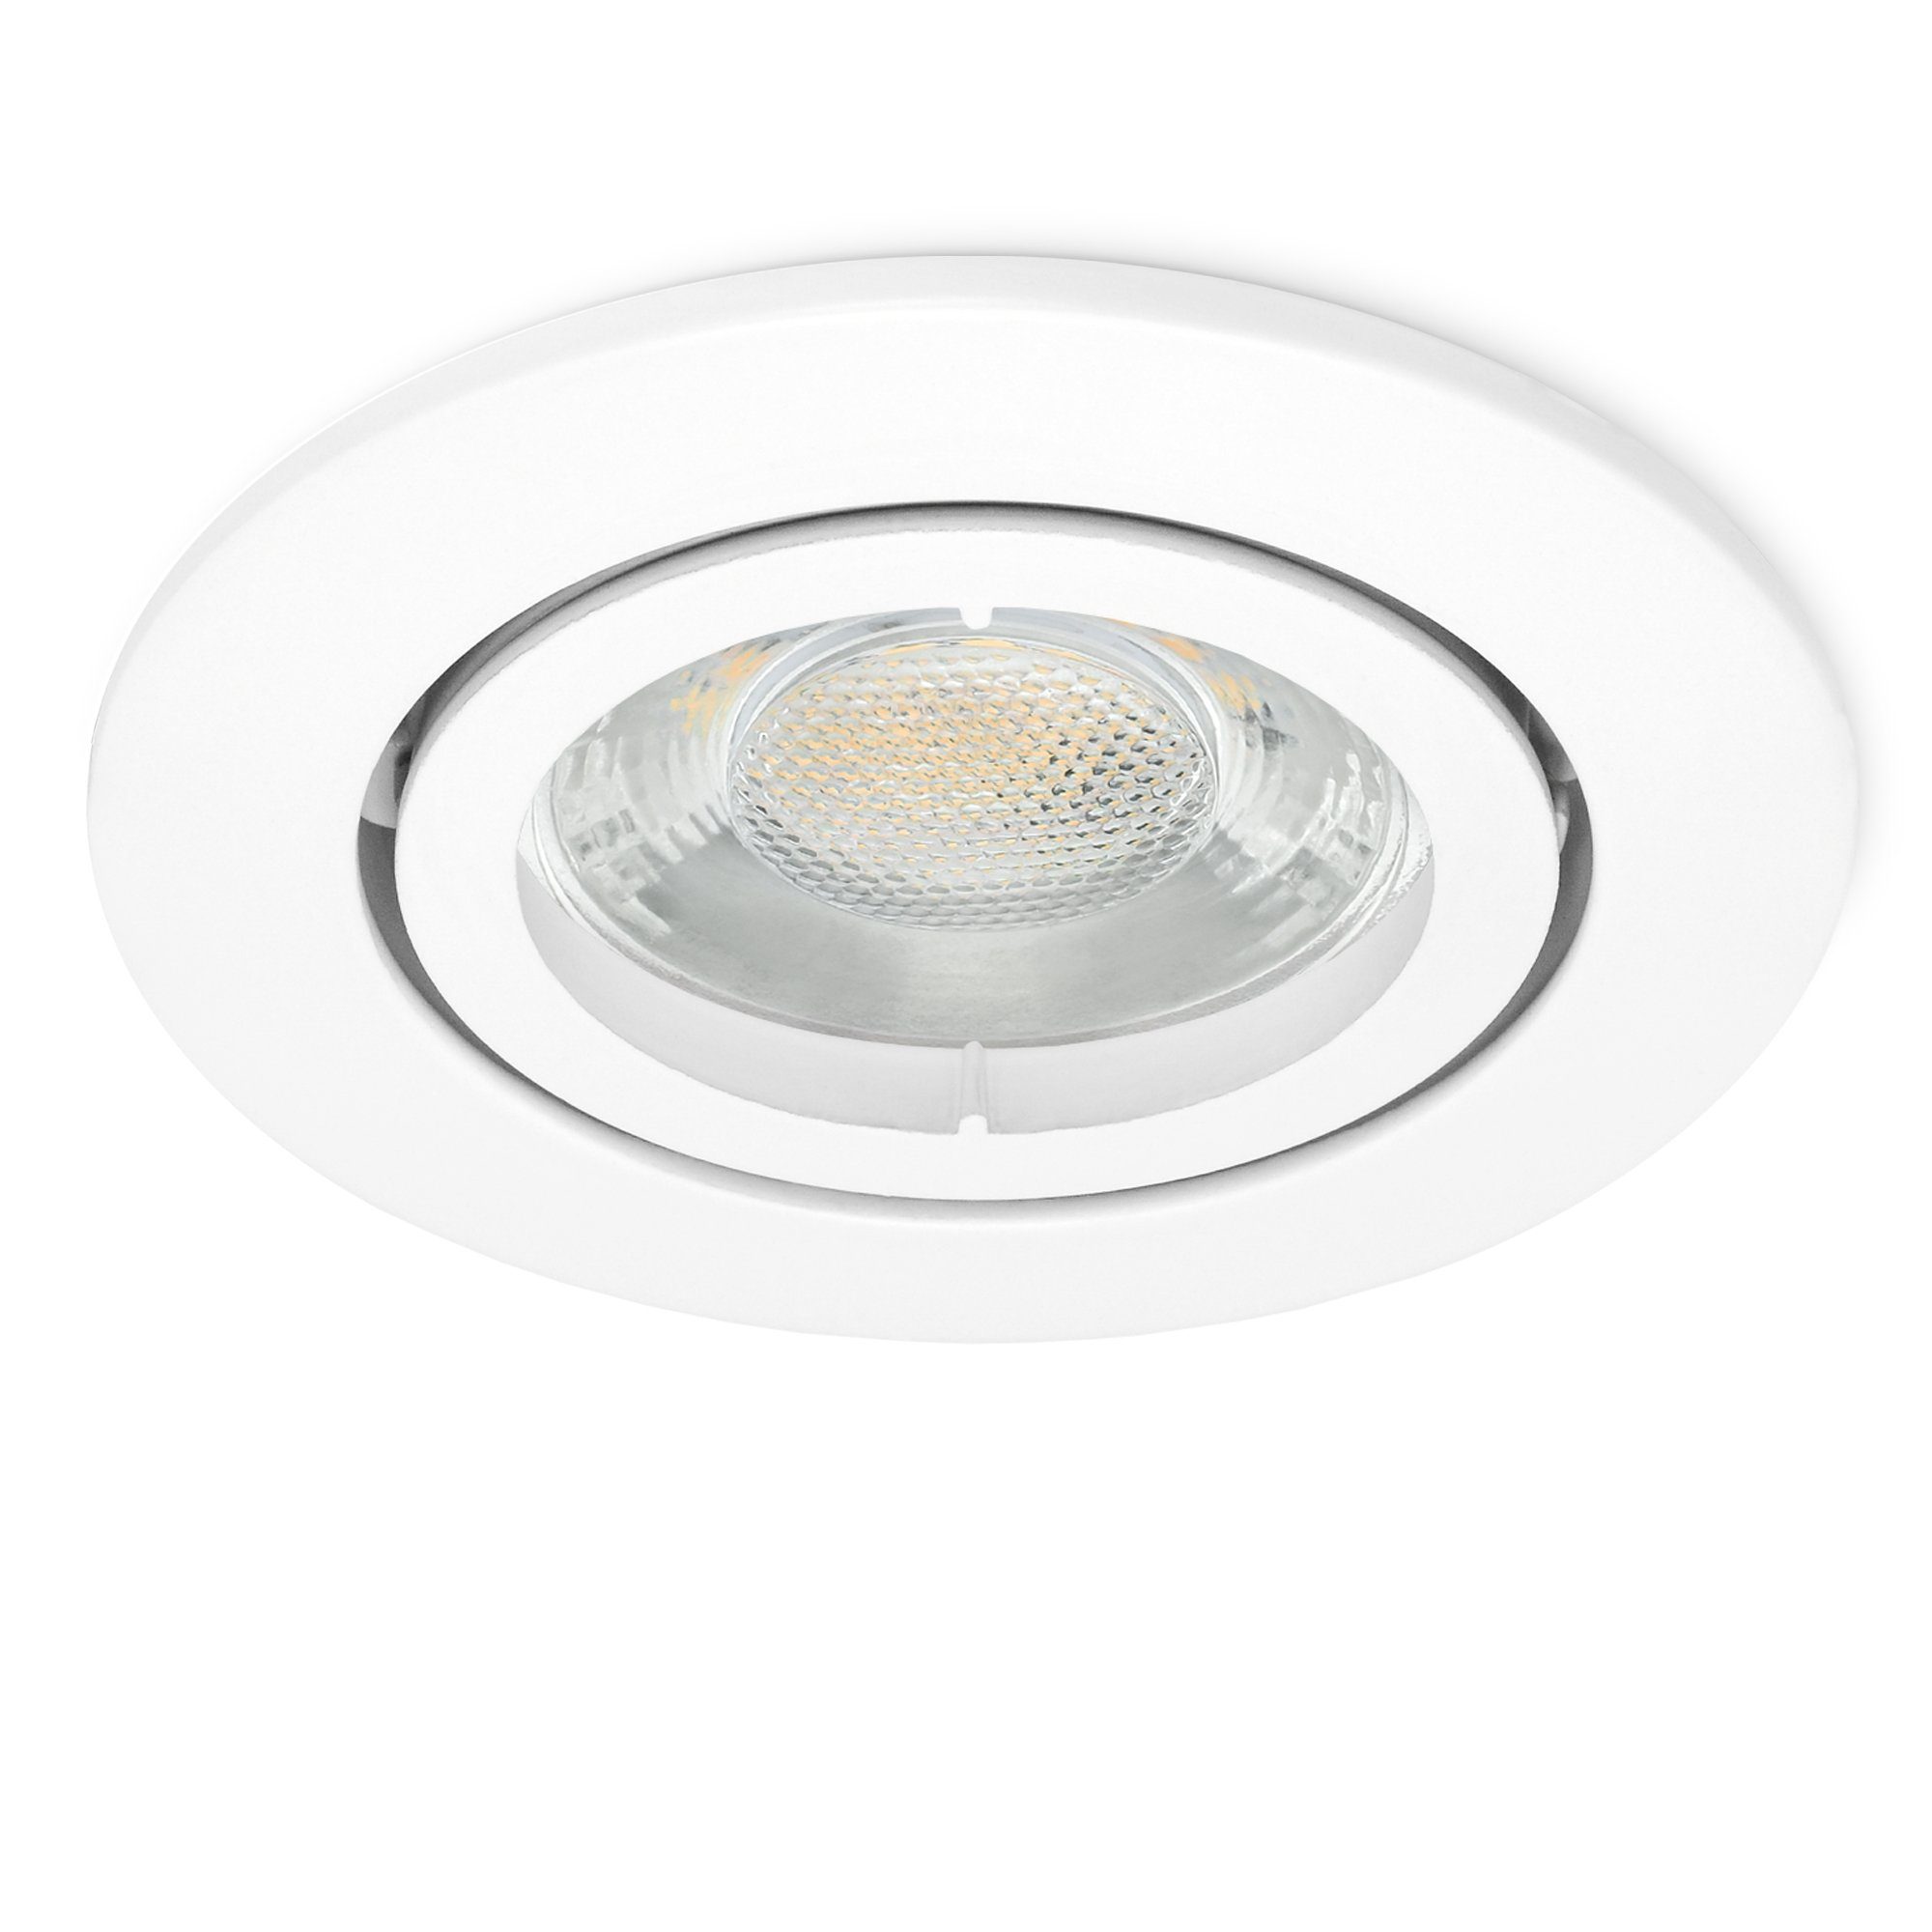 linovum LED Einbaustrahler 10 x Spot inklusive GU10, Leuchtmittel LED Einbaustrahler LED inkl. rund weiss schwenkbar inklusive, Leuchtmittel